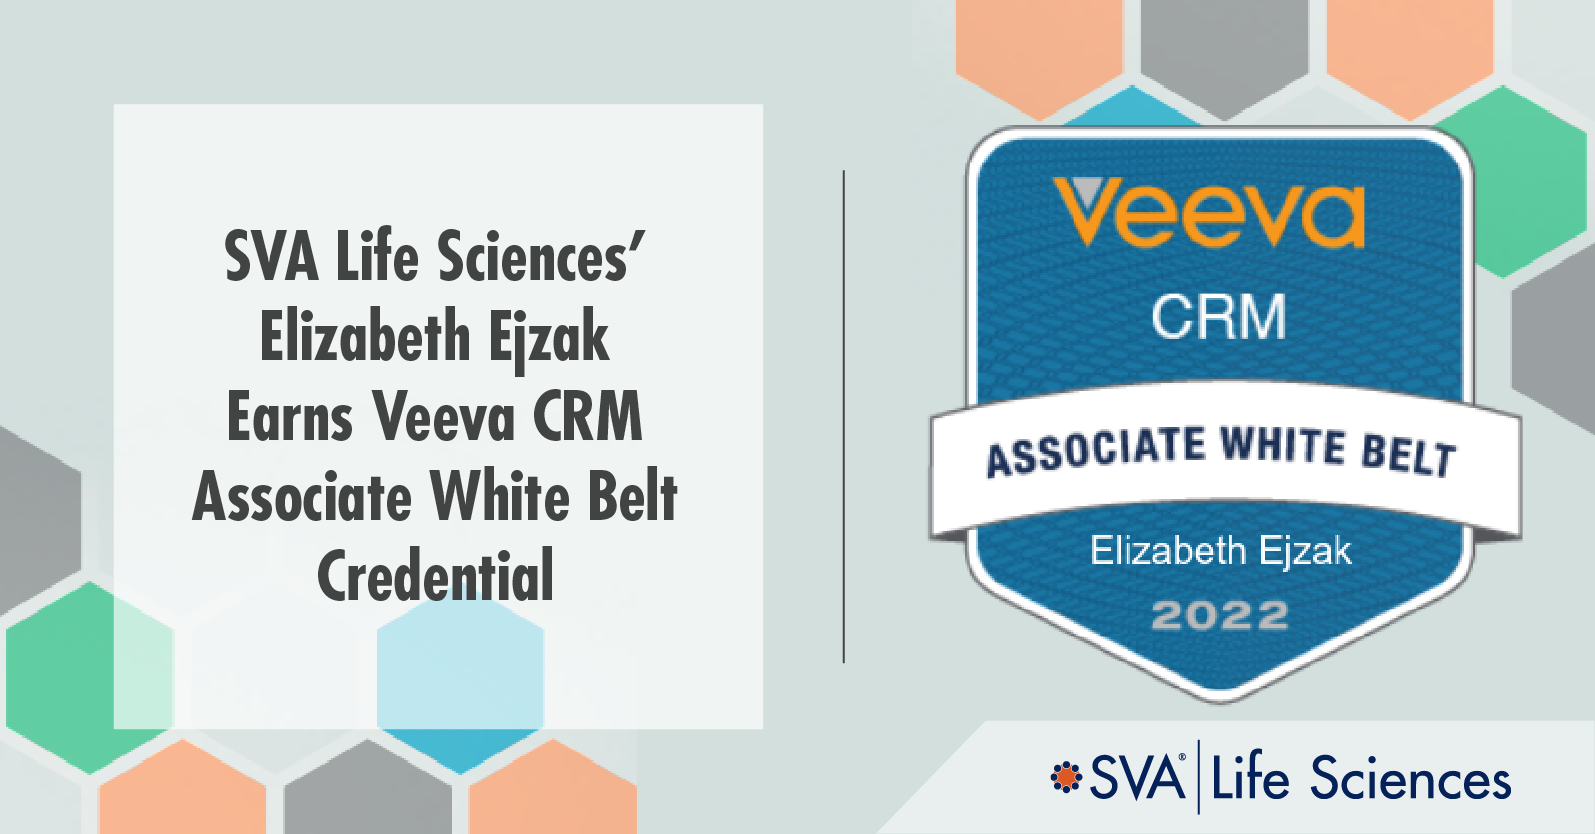 SVA Life Sciences’ Elizabeth Ejzak Earns Veeva CRM Associate White Belt Credential